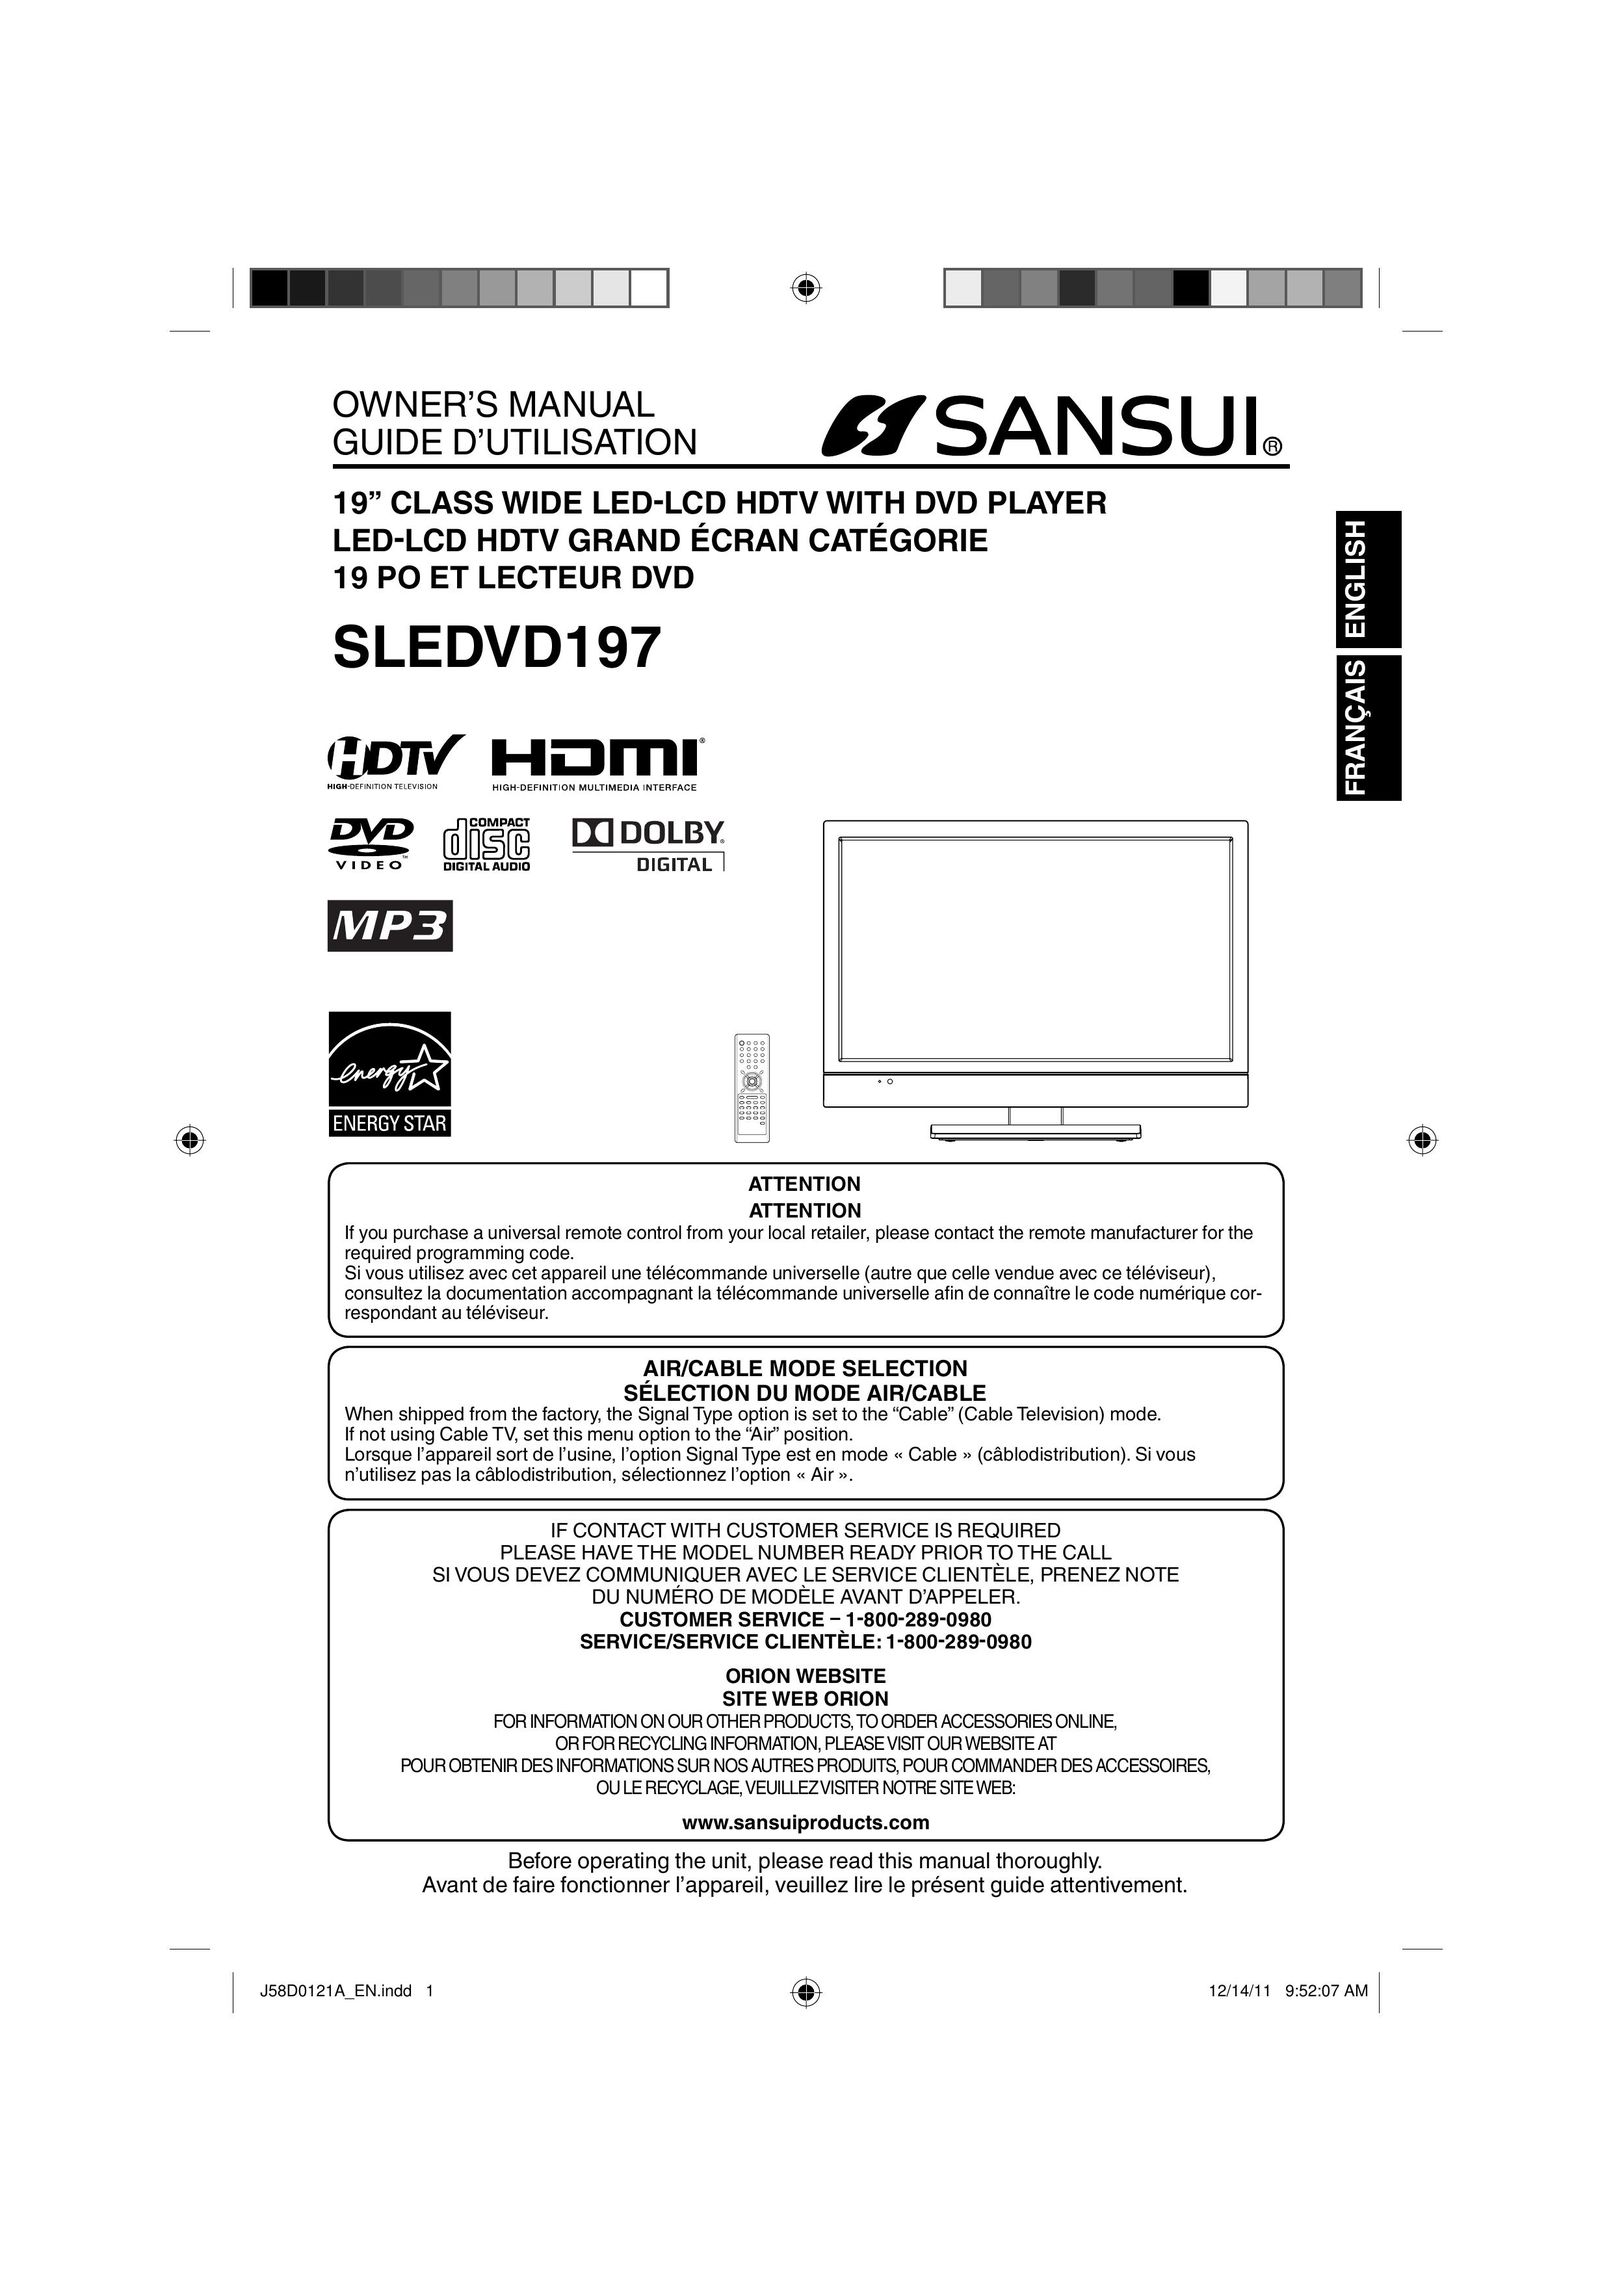 Sansui SLEDVD197 TV DVD Combo User Manual